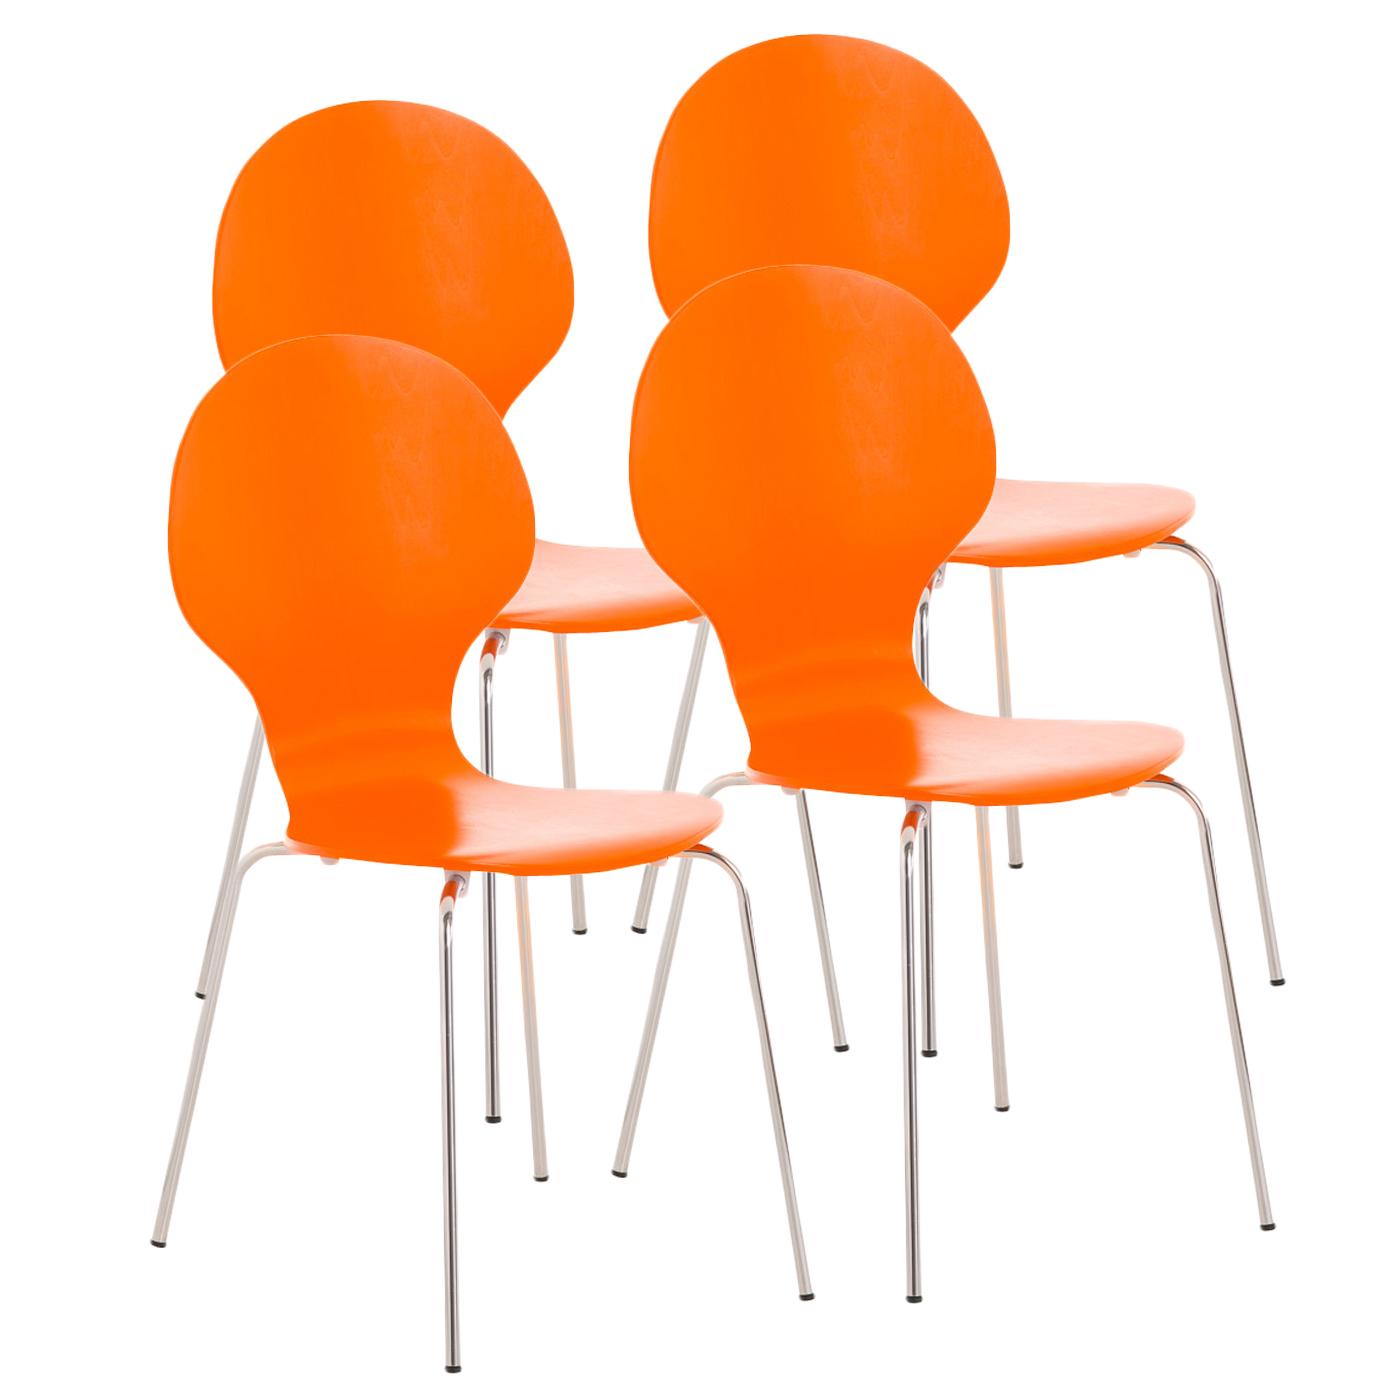 Lote 4 Sillas de Confidente CARVALLO, Estructura Metálica, Apilables, en Color Naranja